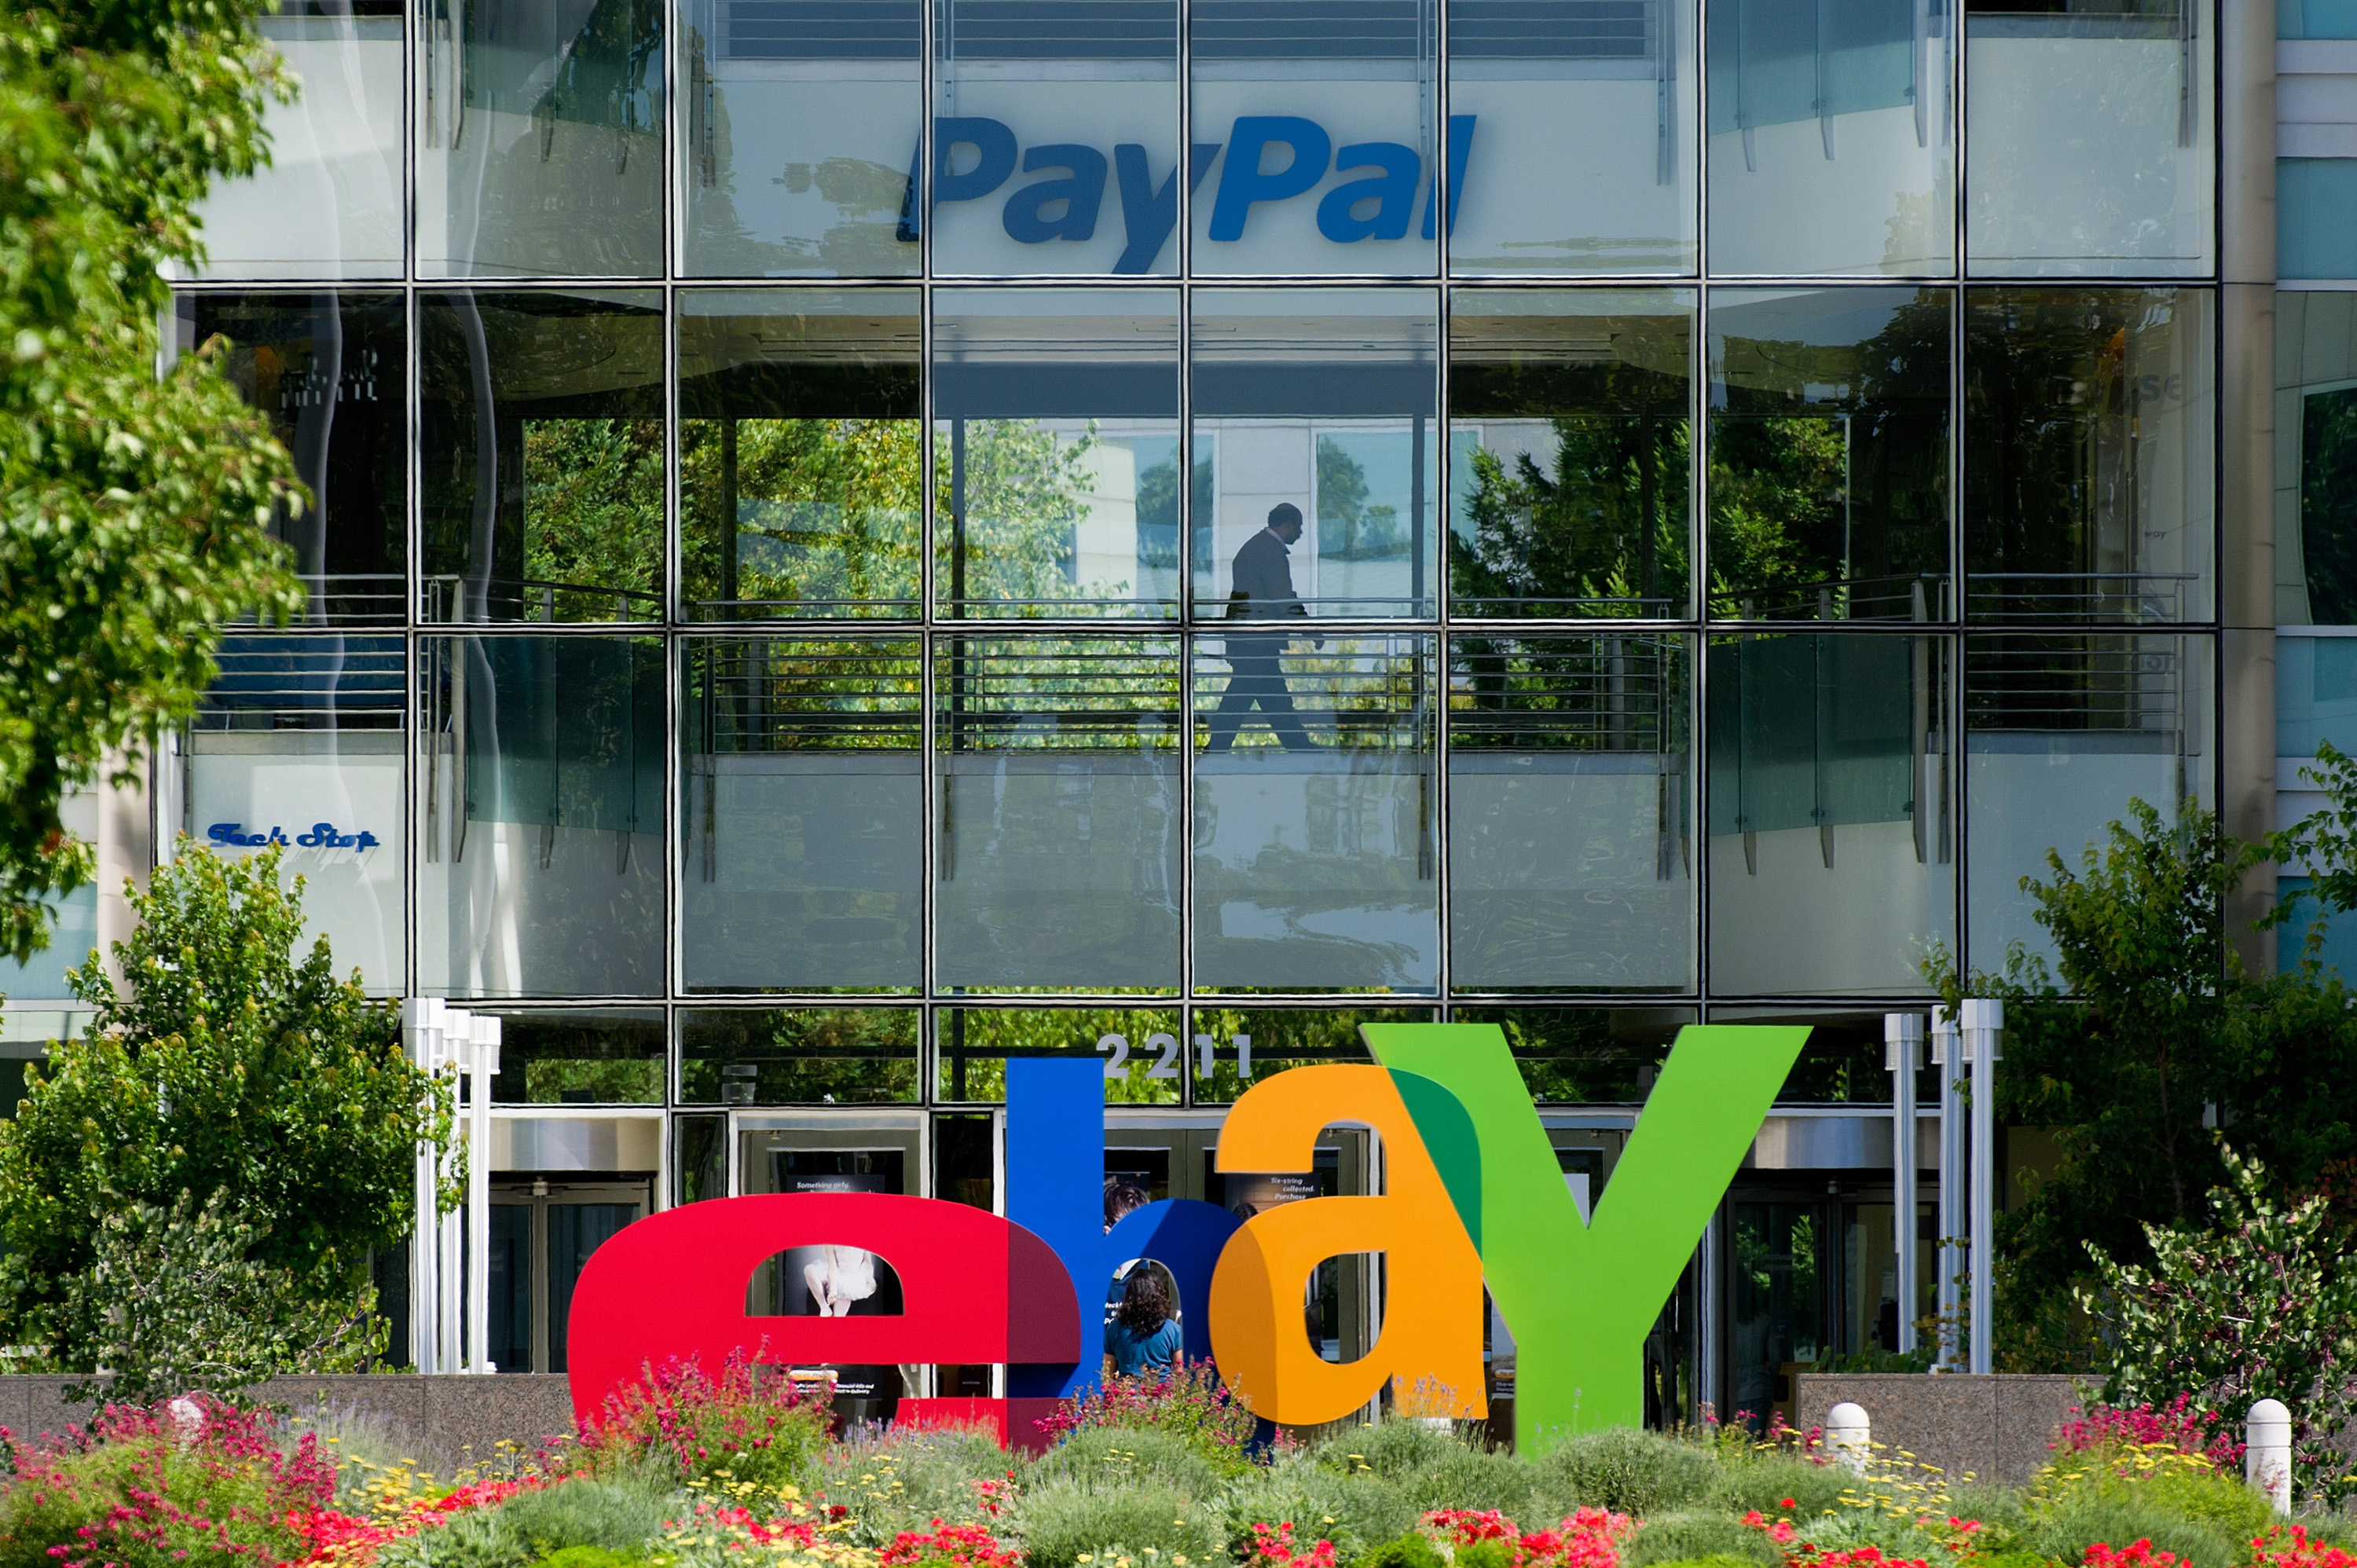 The eBay headquarters seen in San Jose, Calif., in 2011 (David Paul Morris—Bloomberg/Getty Images)